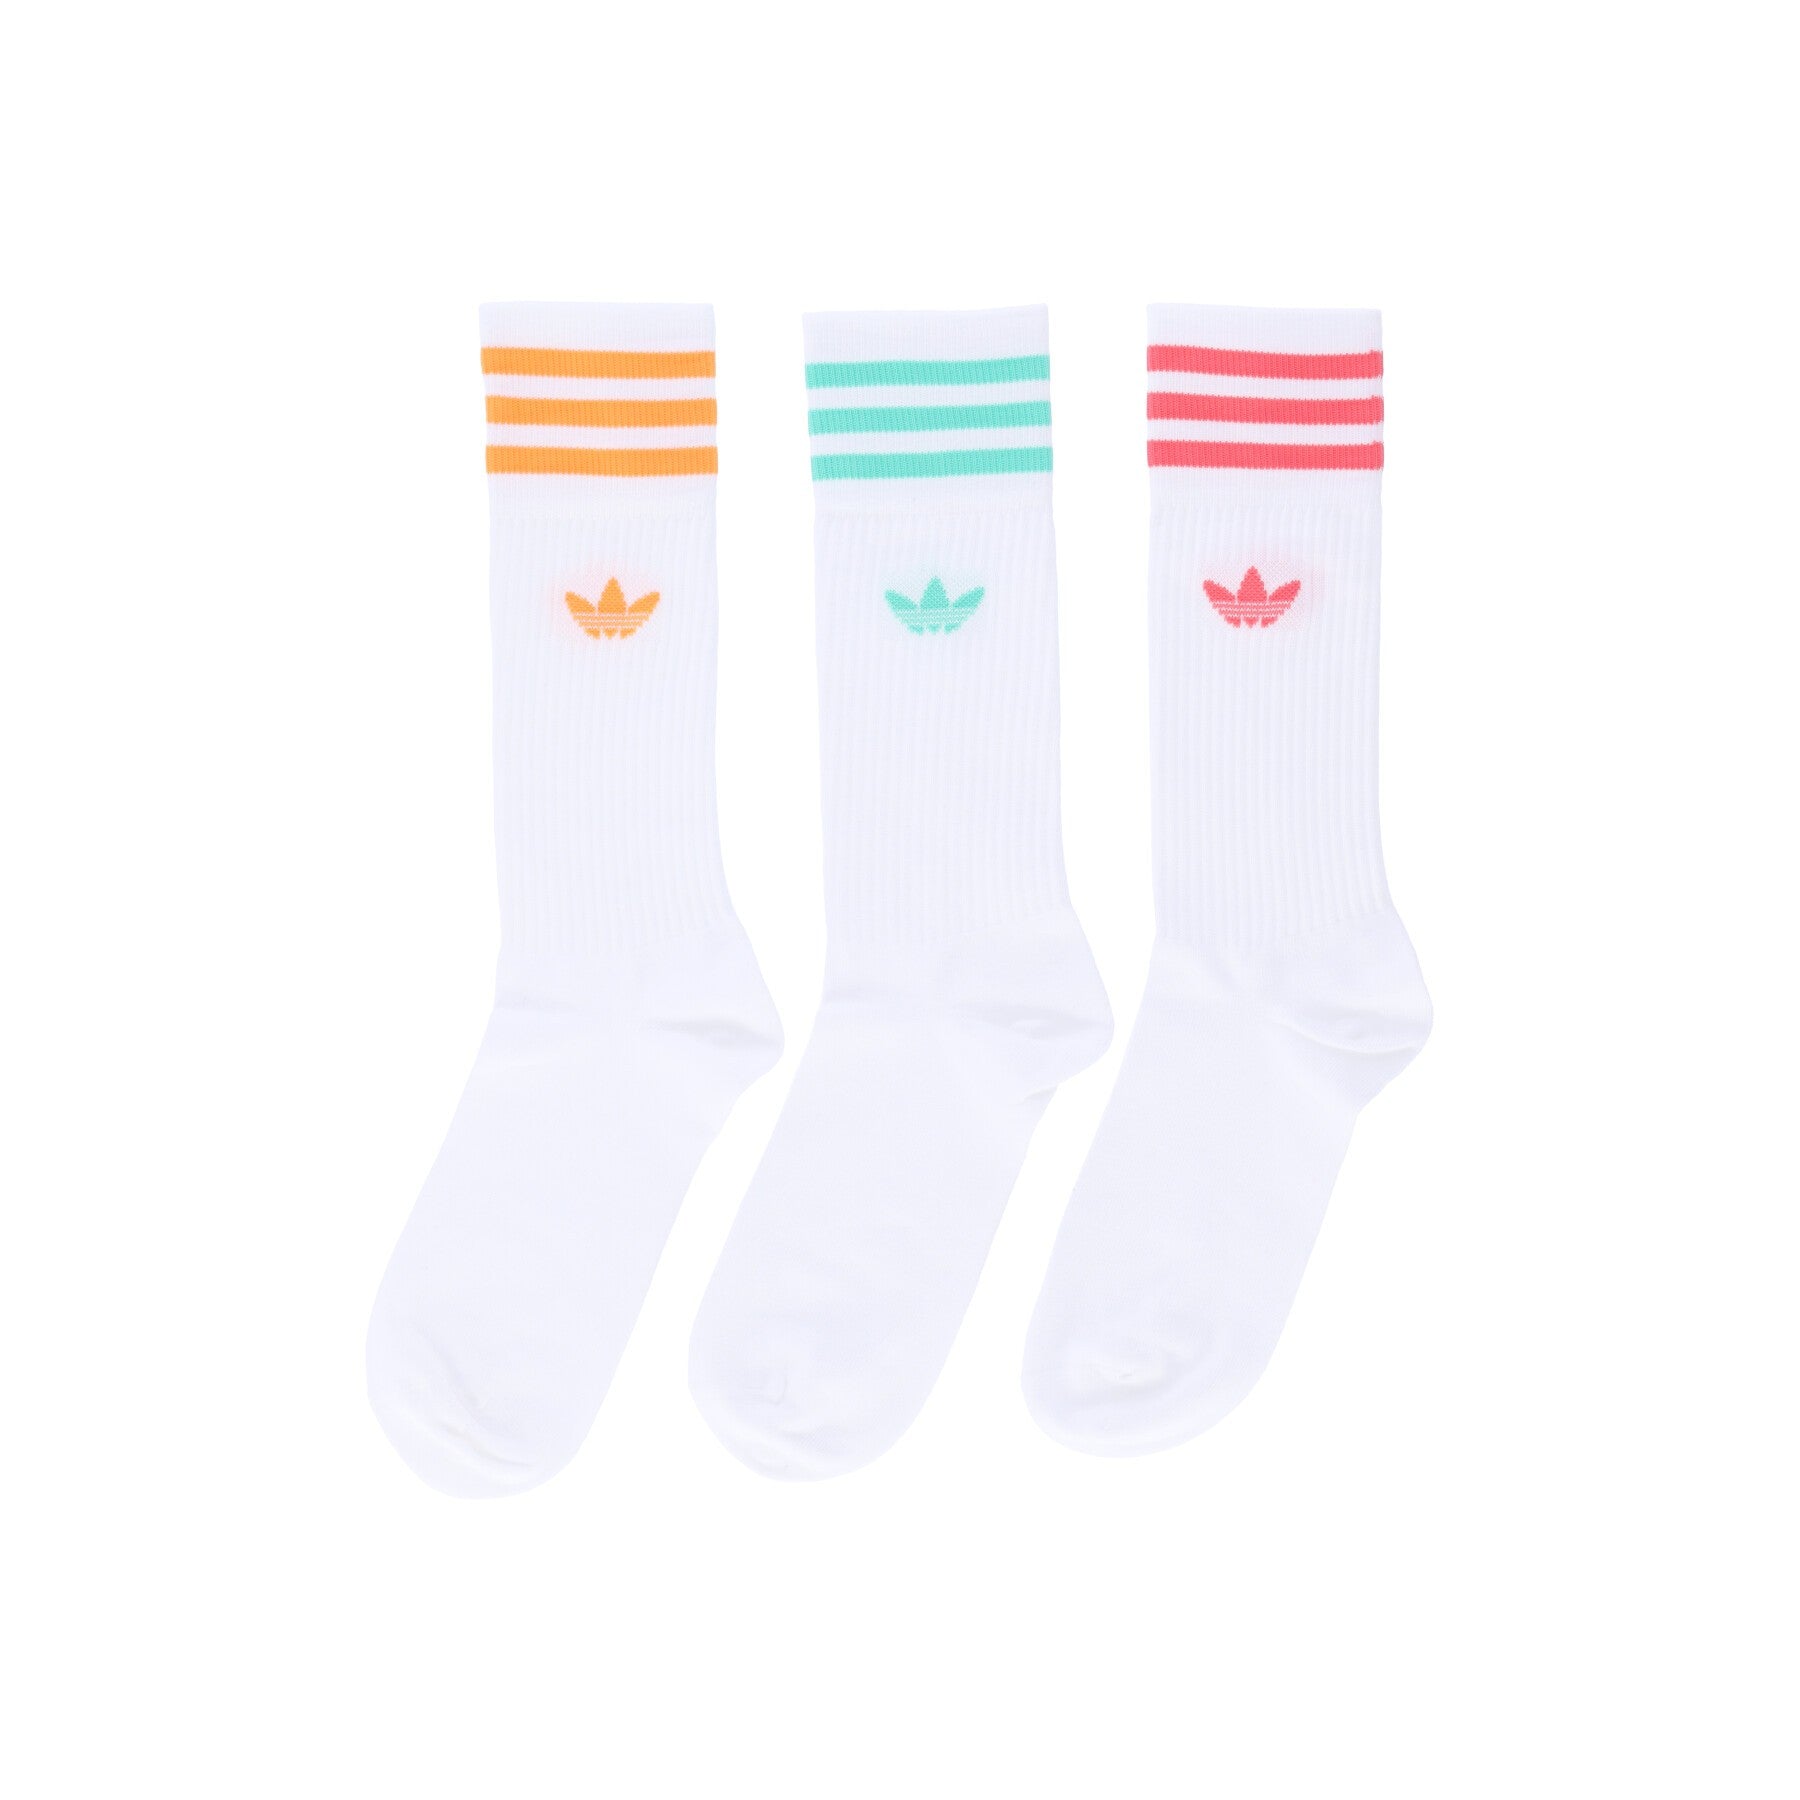 Adidas, Calza Media Uomo Solid Crew Socks 3pk, White/orange Rush/fluo Green/red